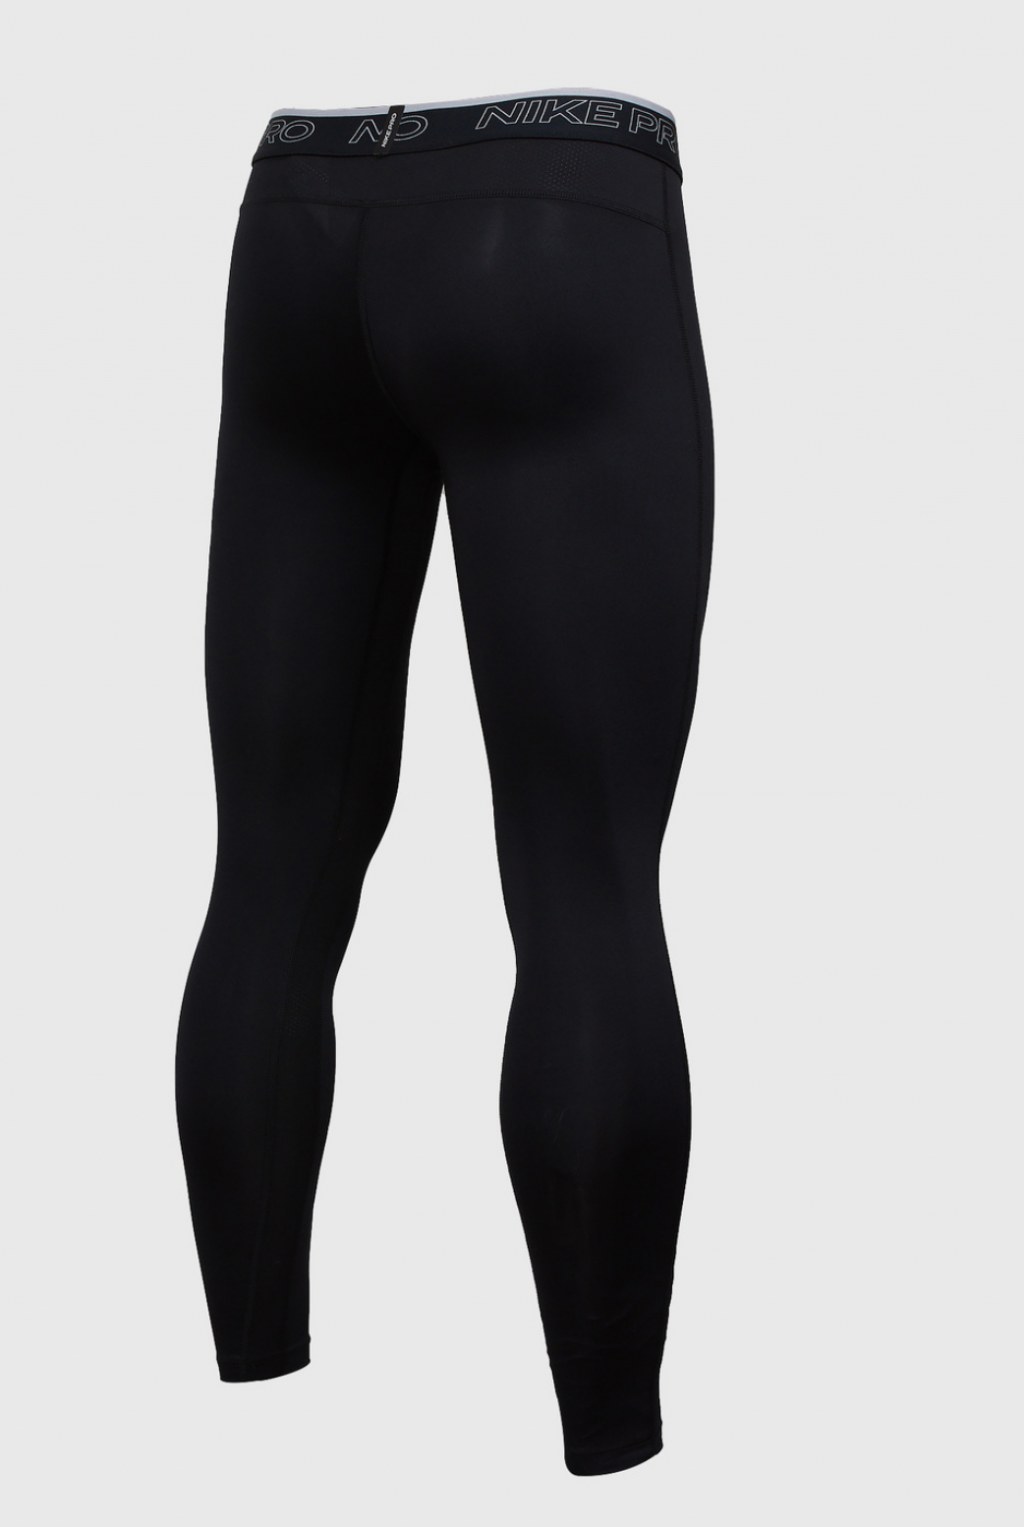 Nike Pro Dri-Fit Tight/термоактивное белье штаны